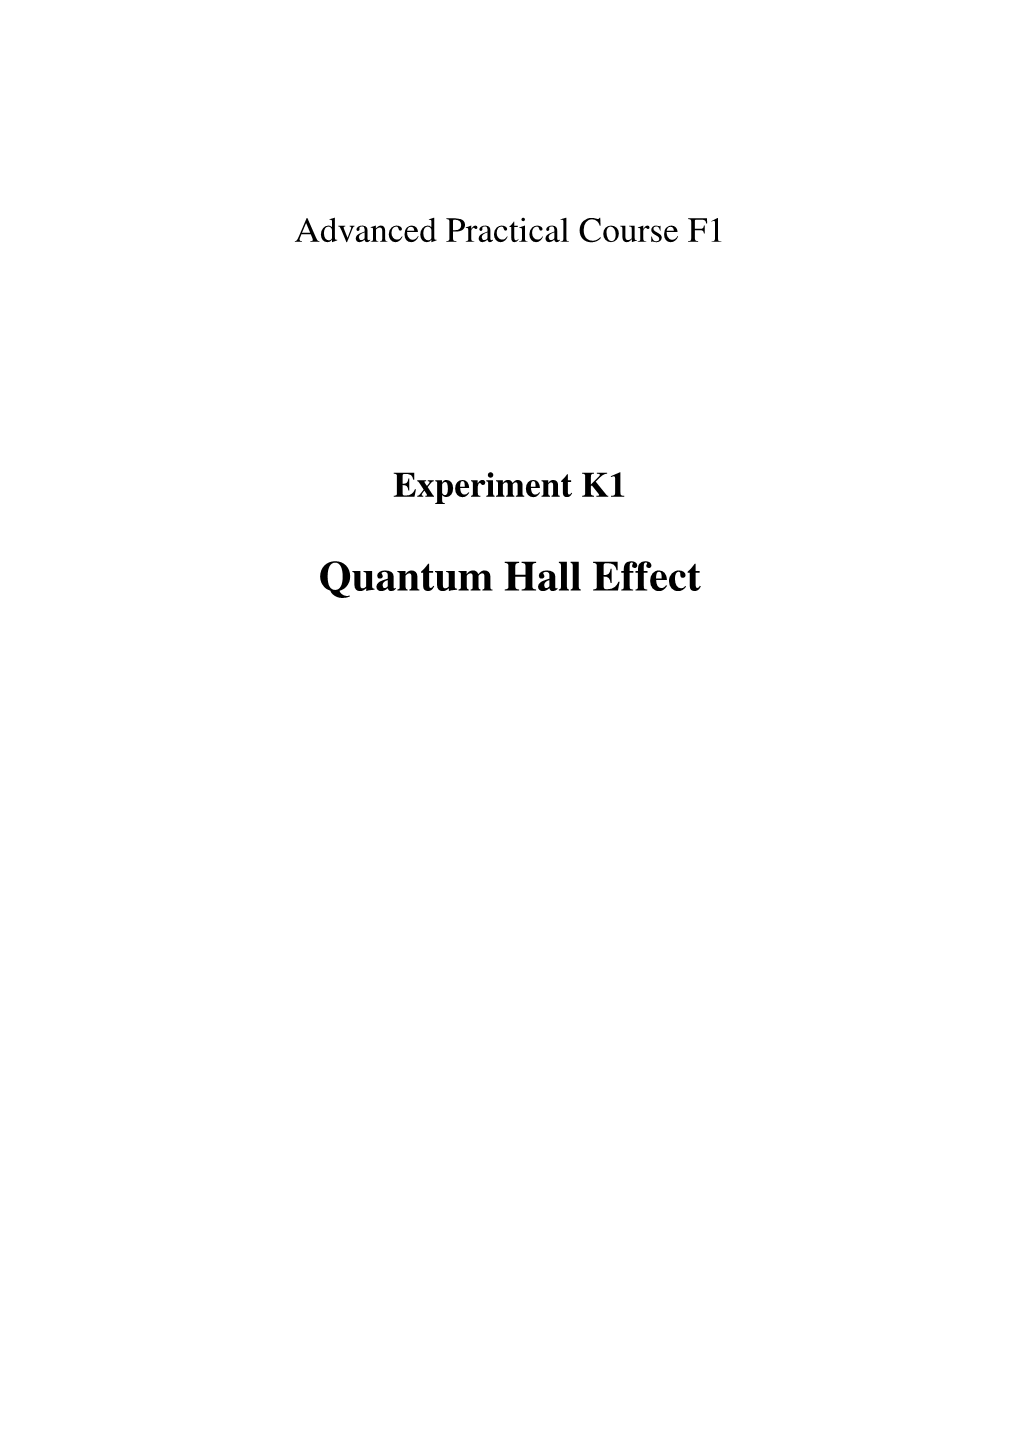 Quantum Hall Effect Contents